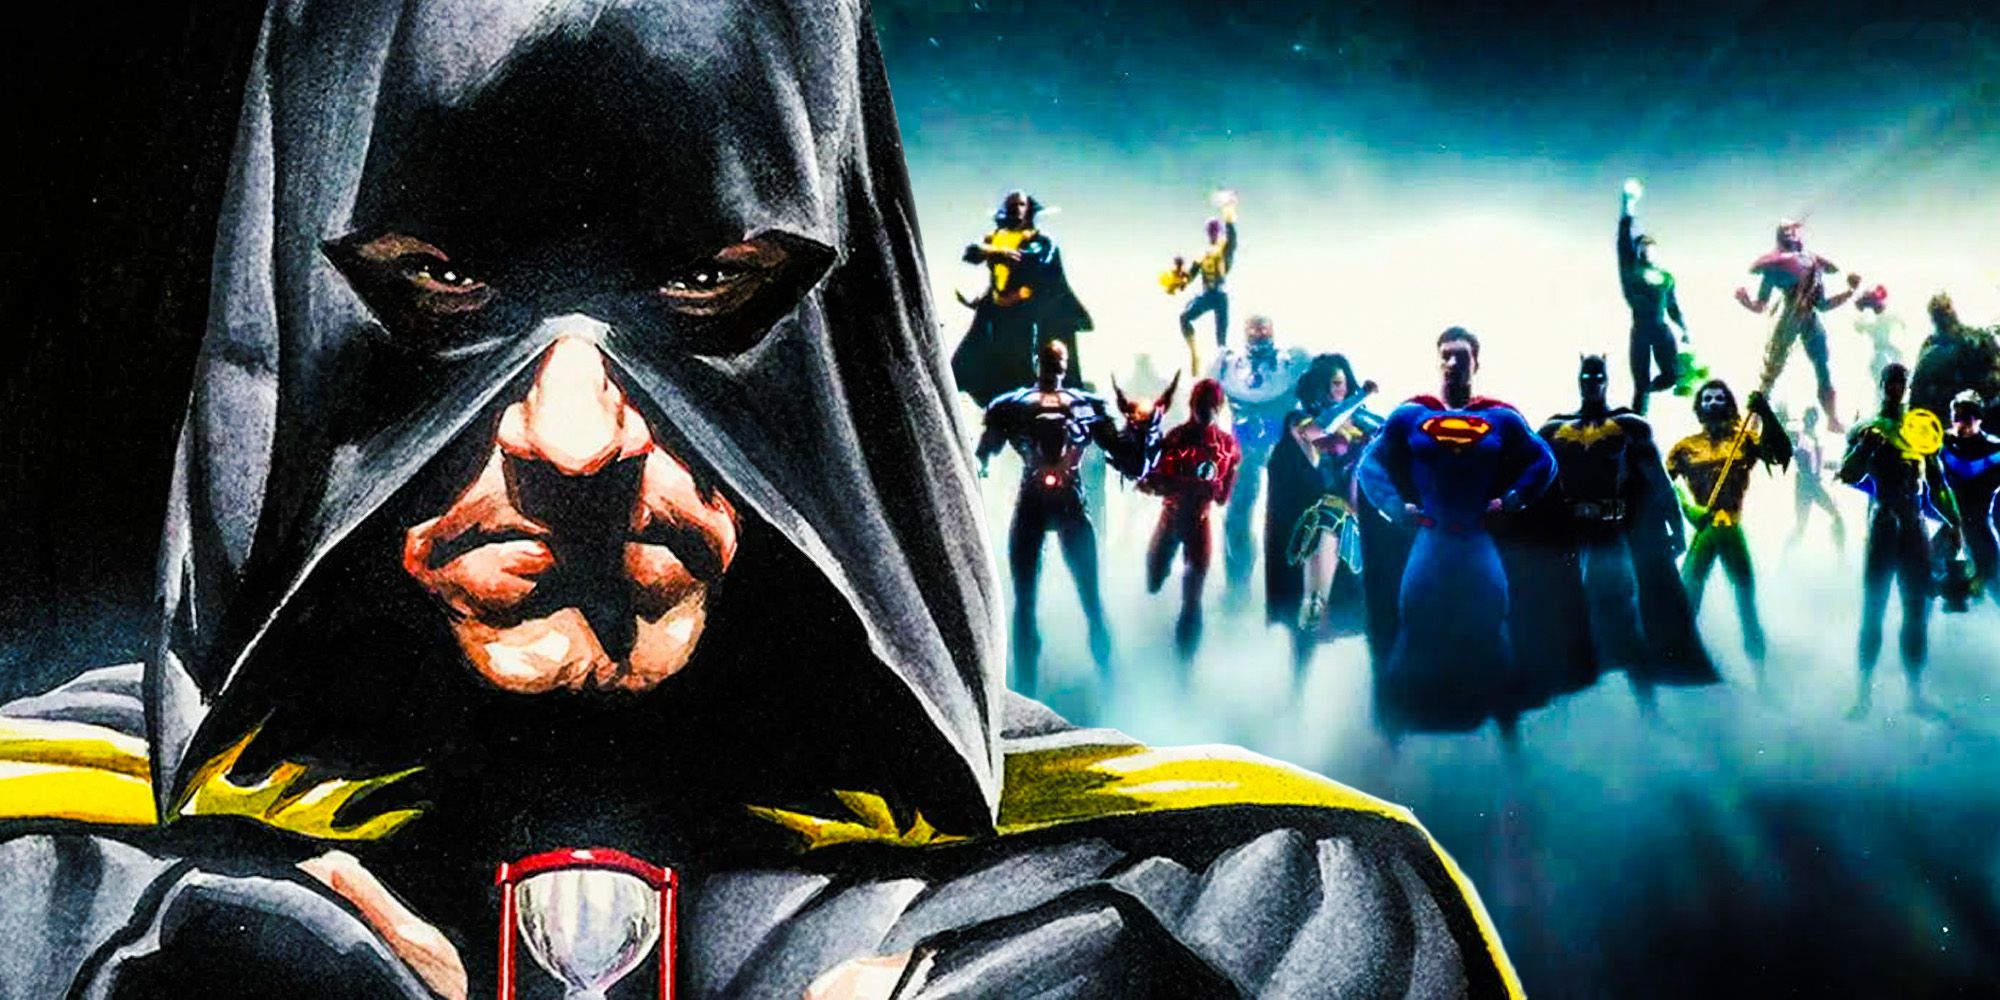 Hourman DC new superhero movie